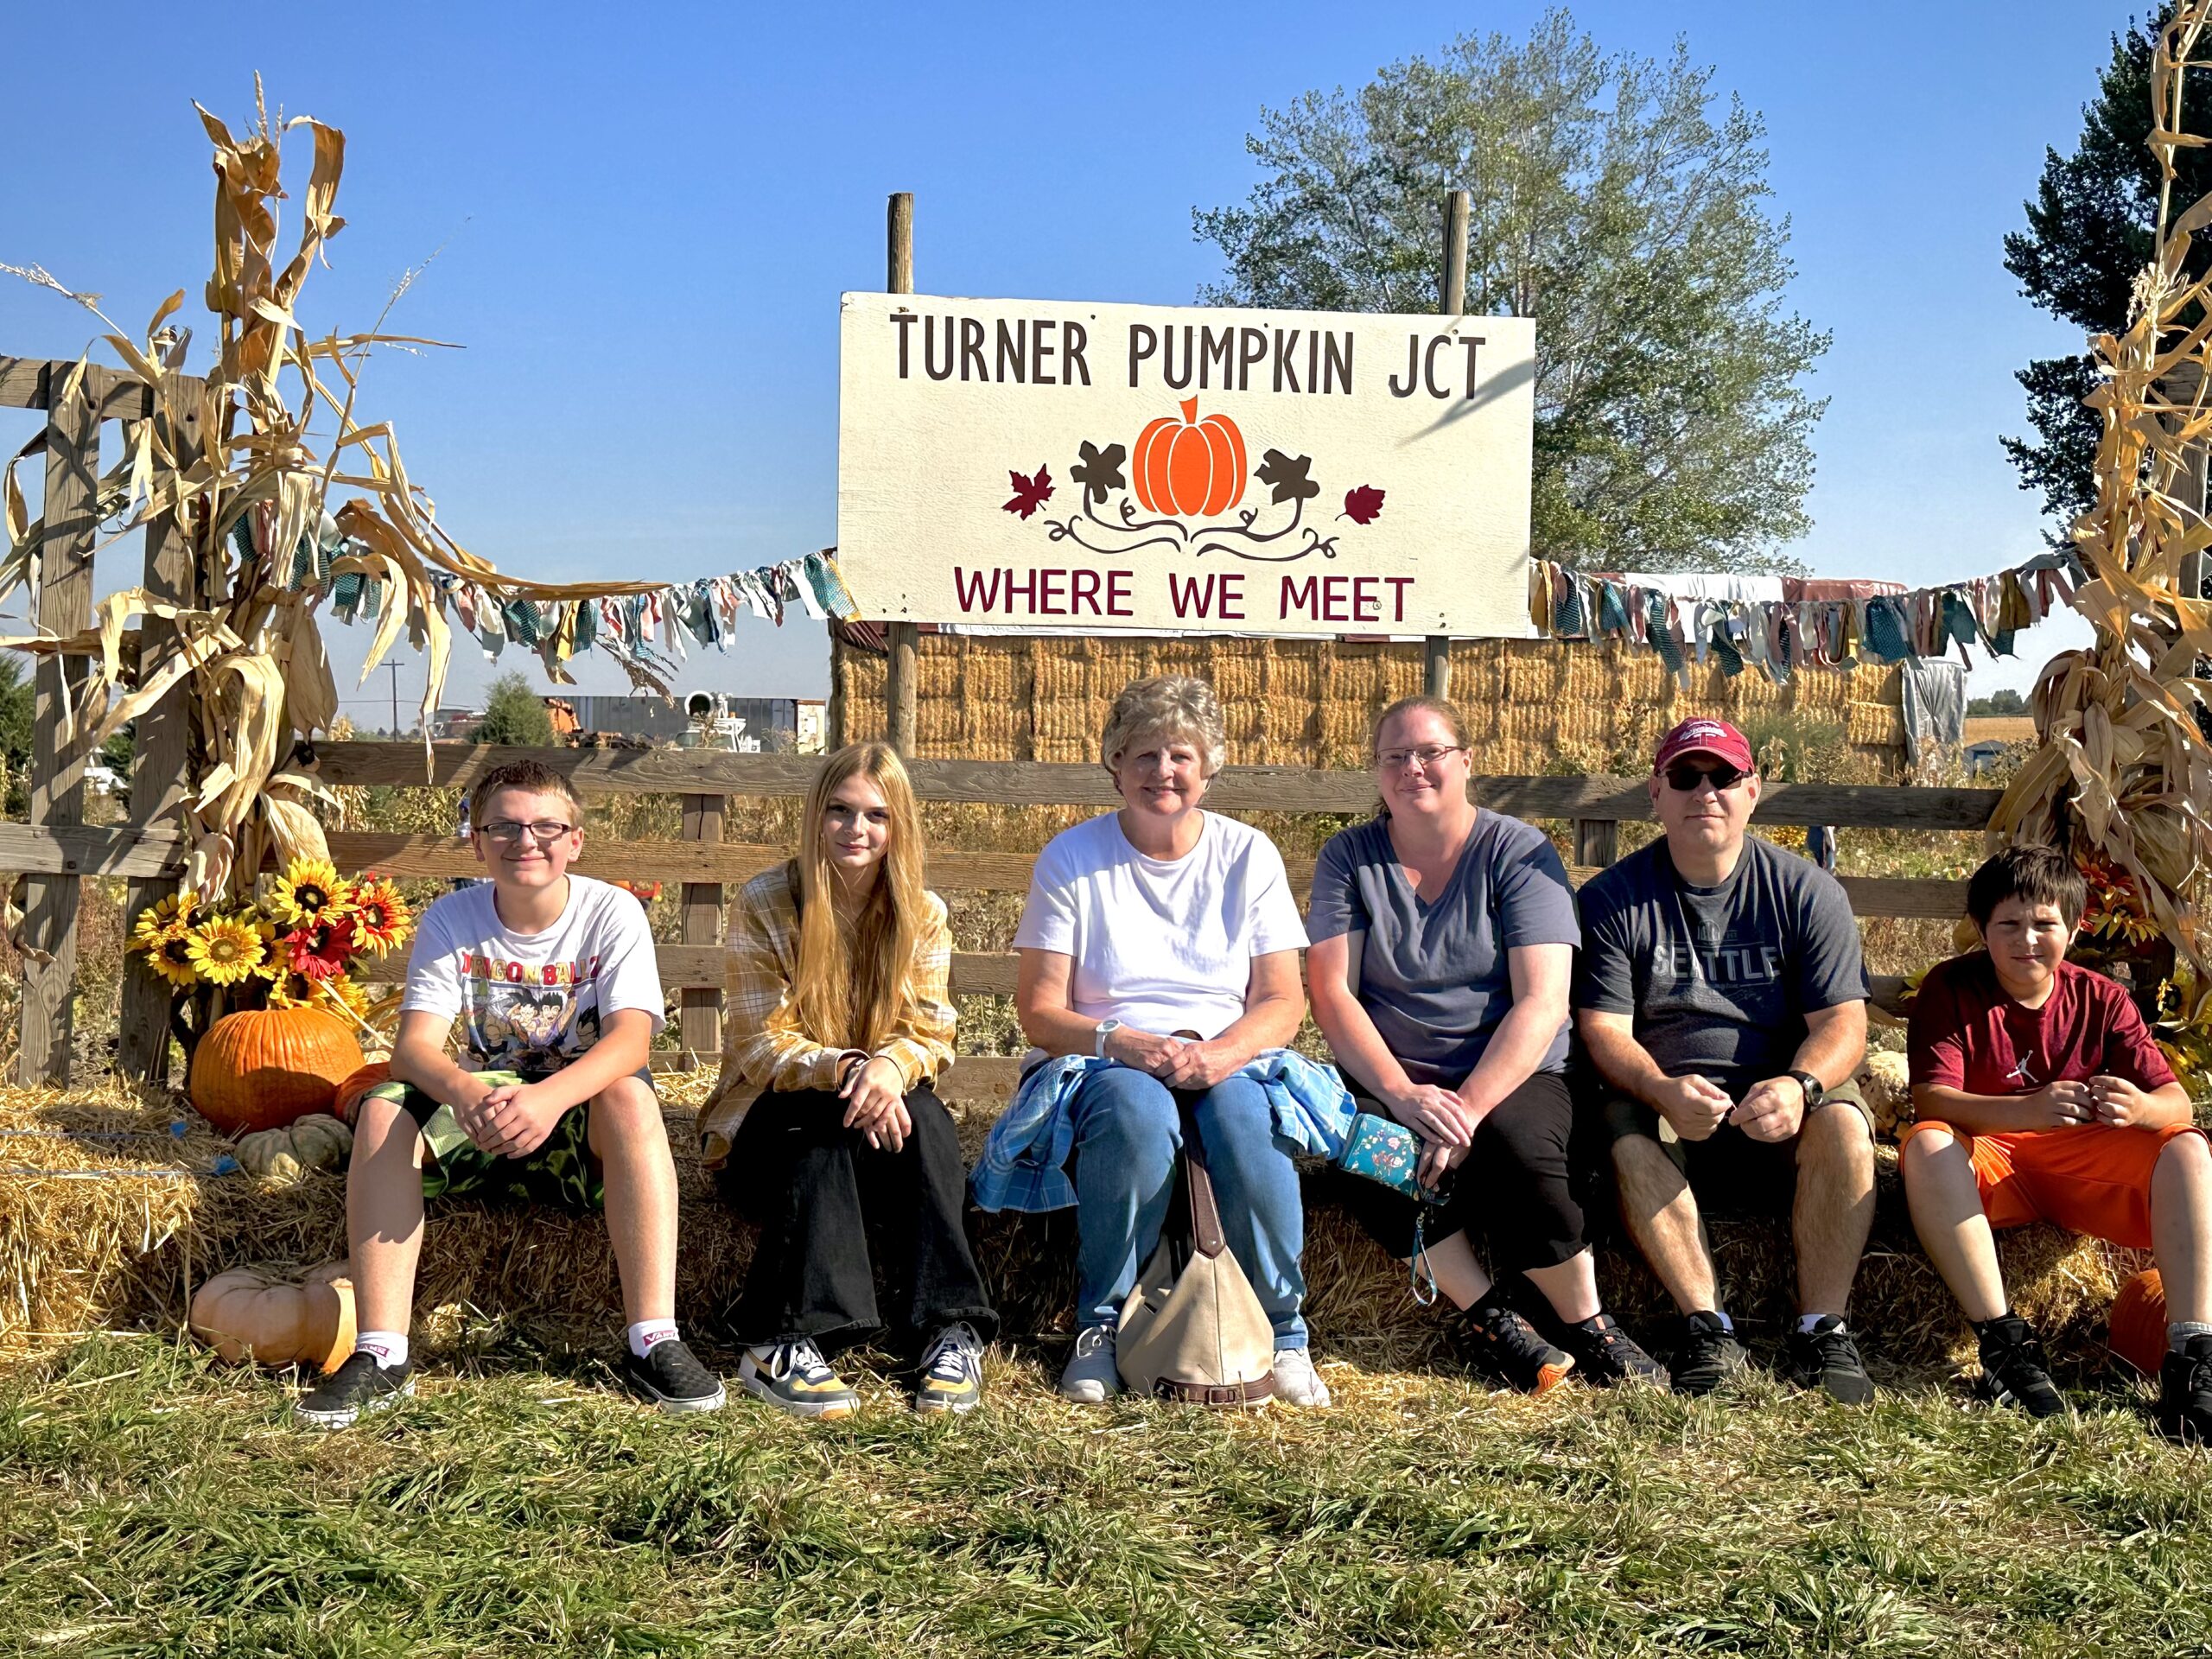 Turner pumpkin junction -123